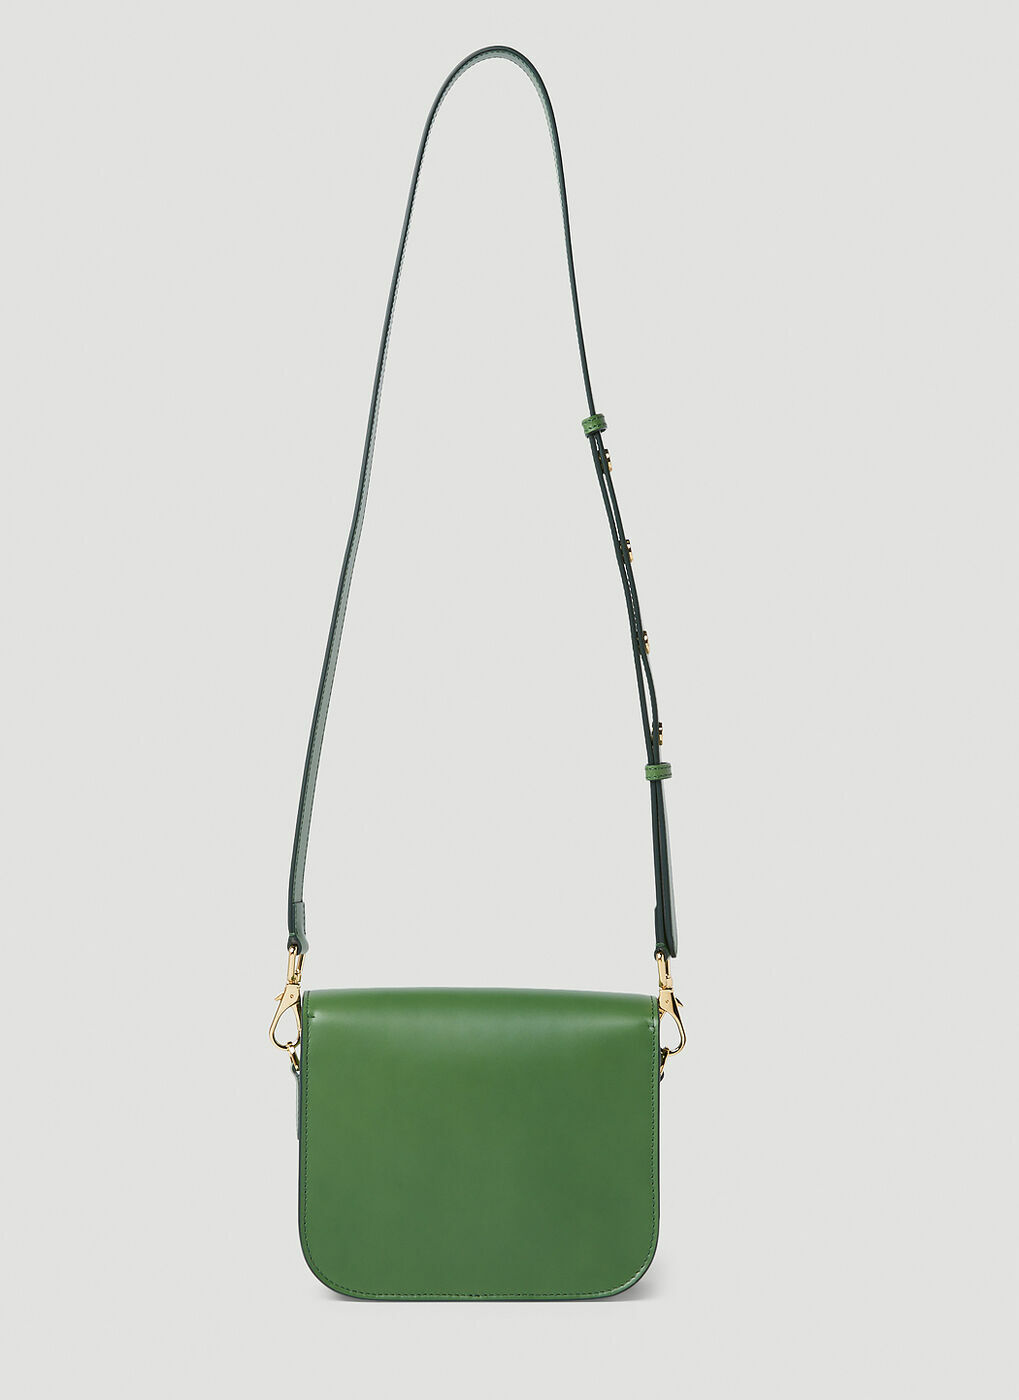 Elizabeth Small Shoulder Bag in Green Burberry